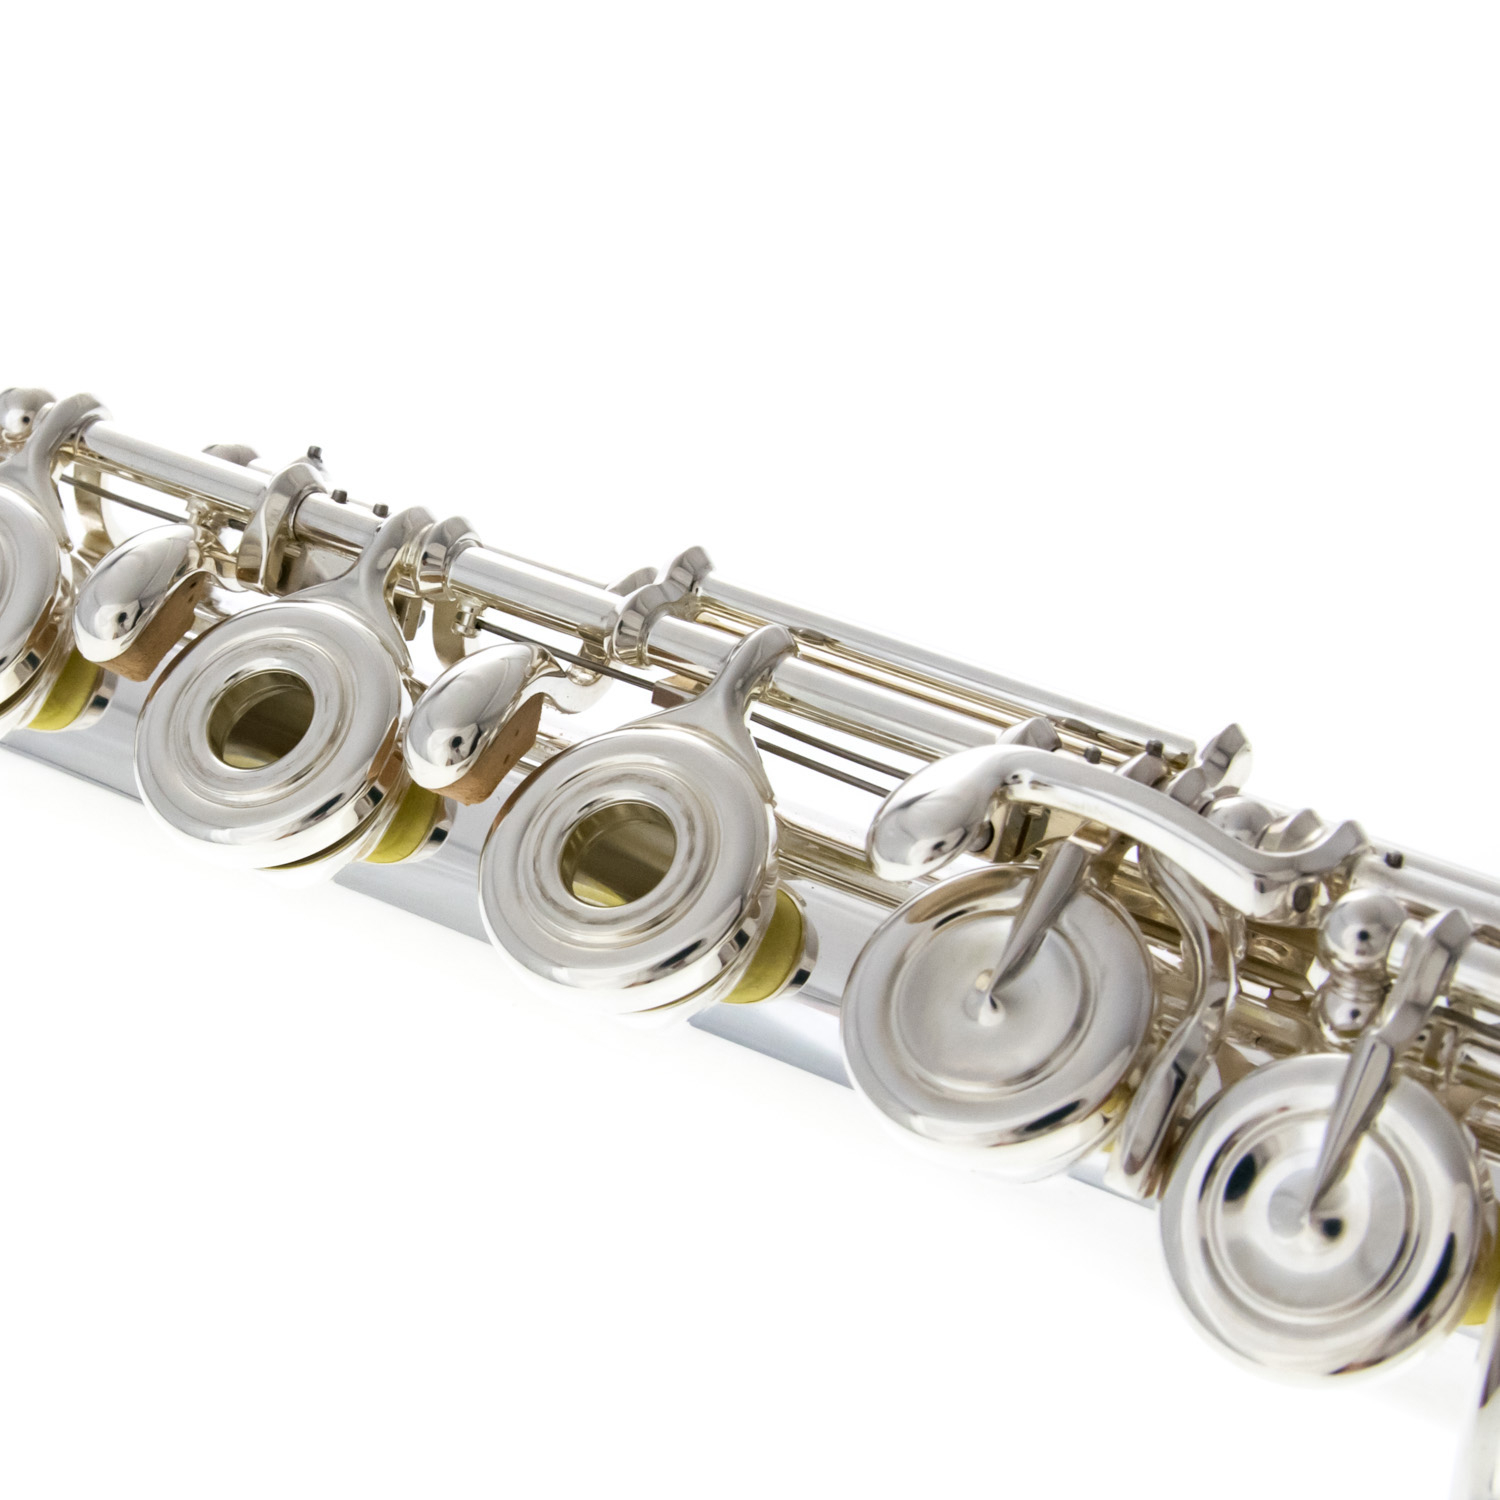 Yamaha Flute - YFL 577 H